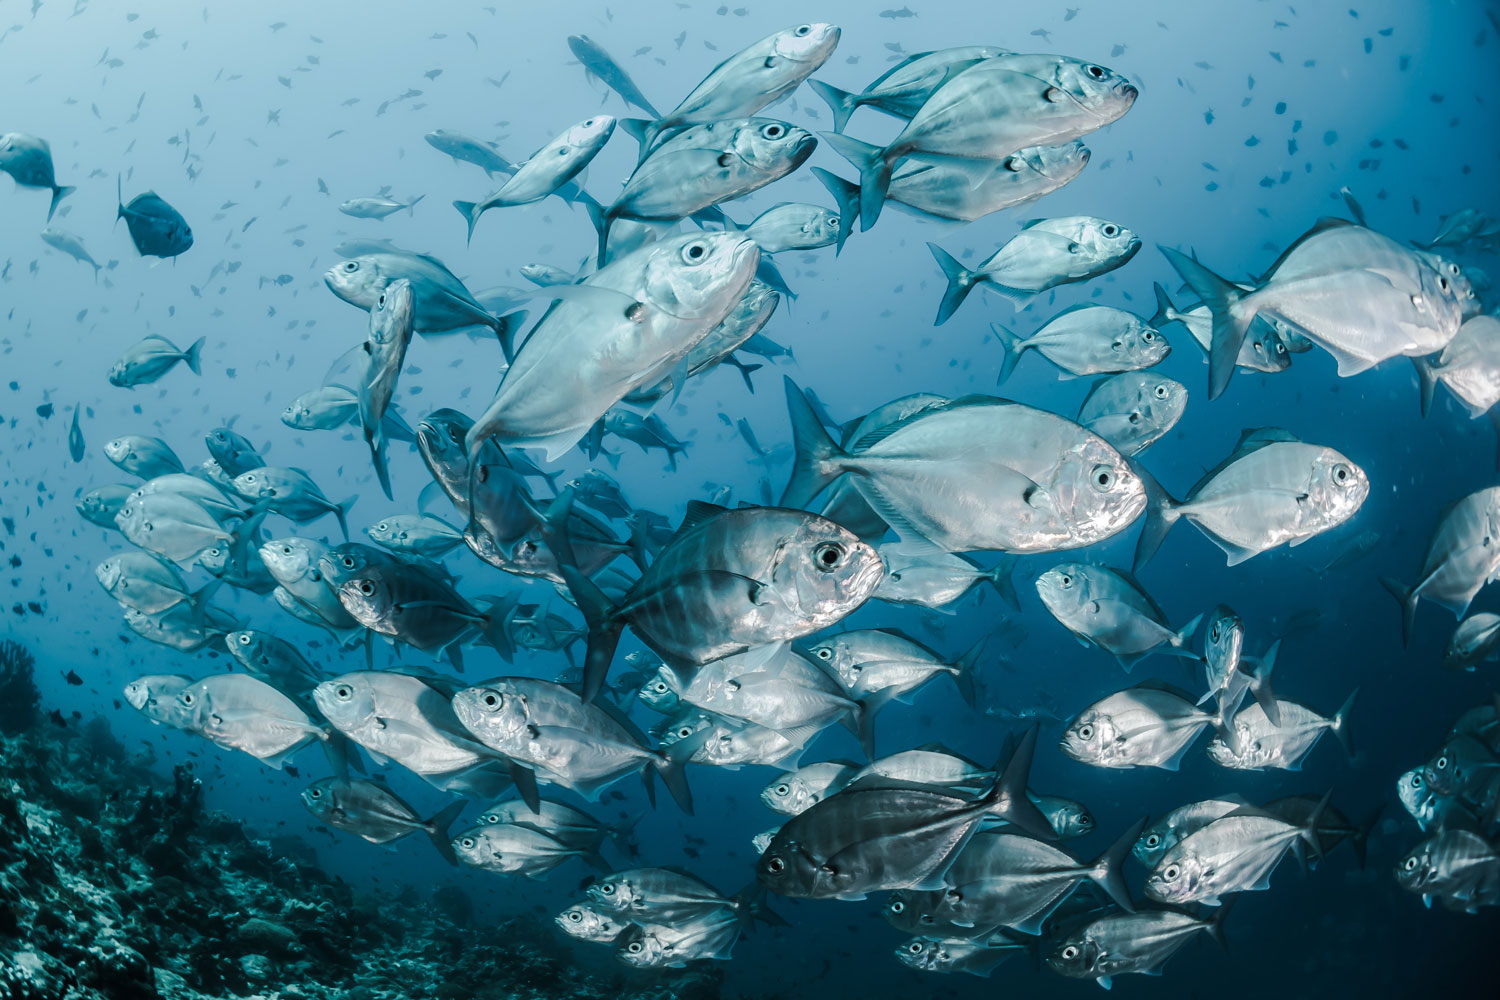 School of silver fish in the ocean